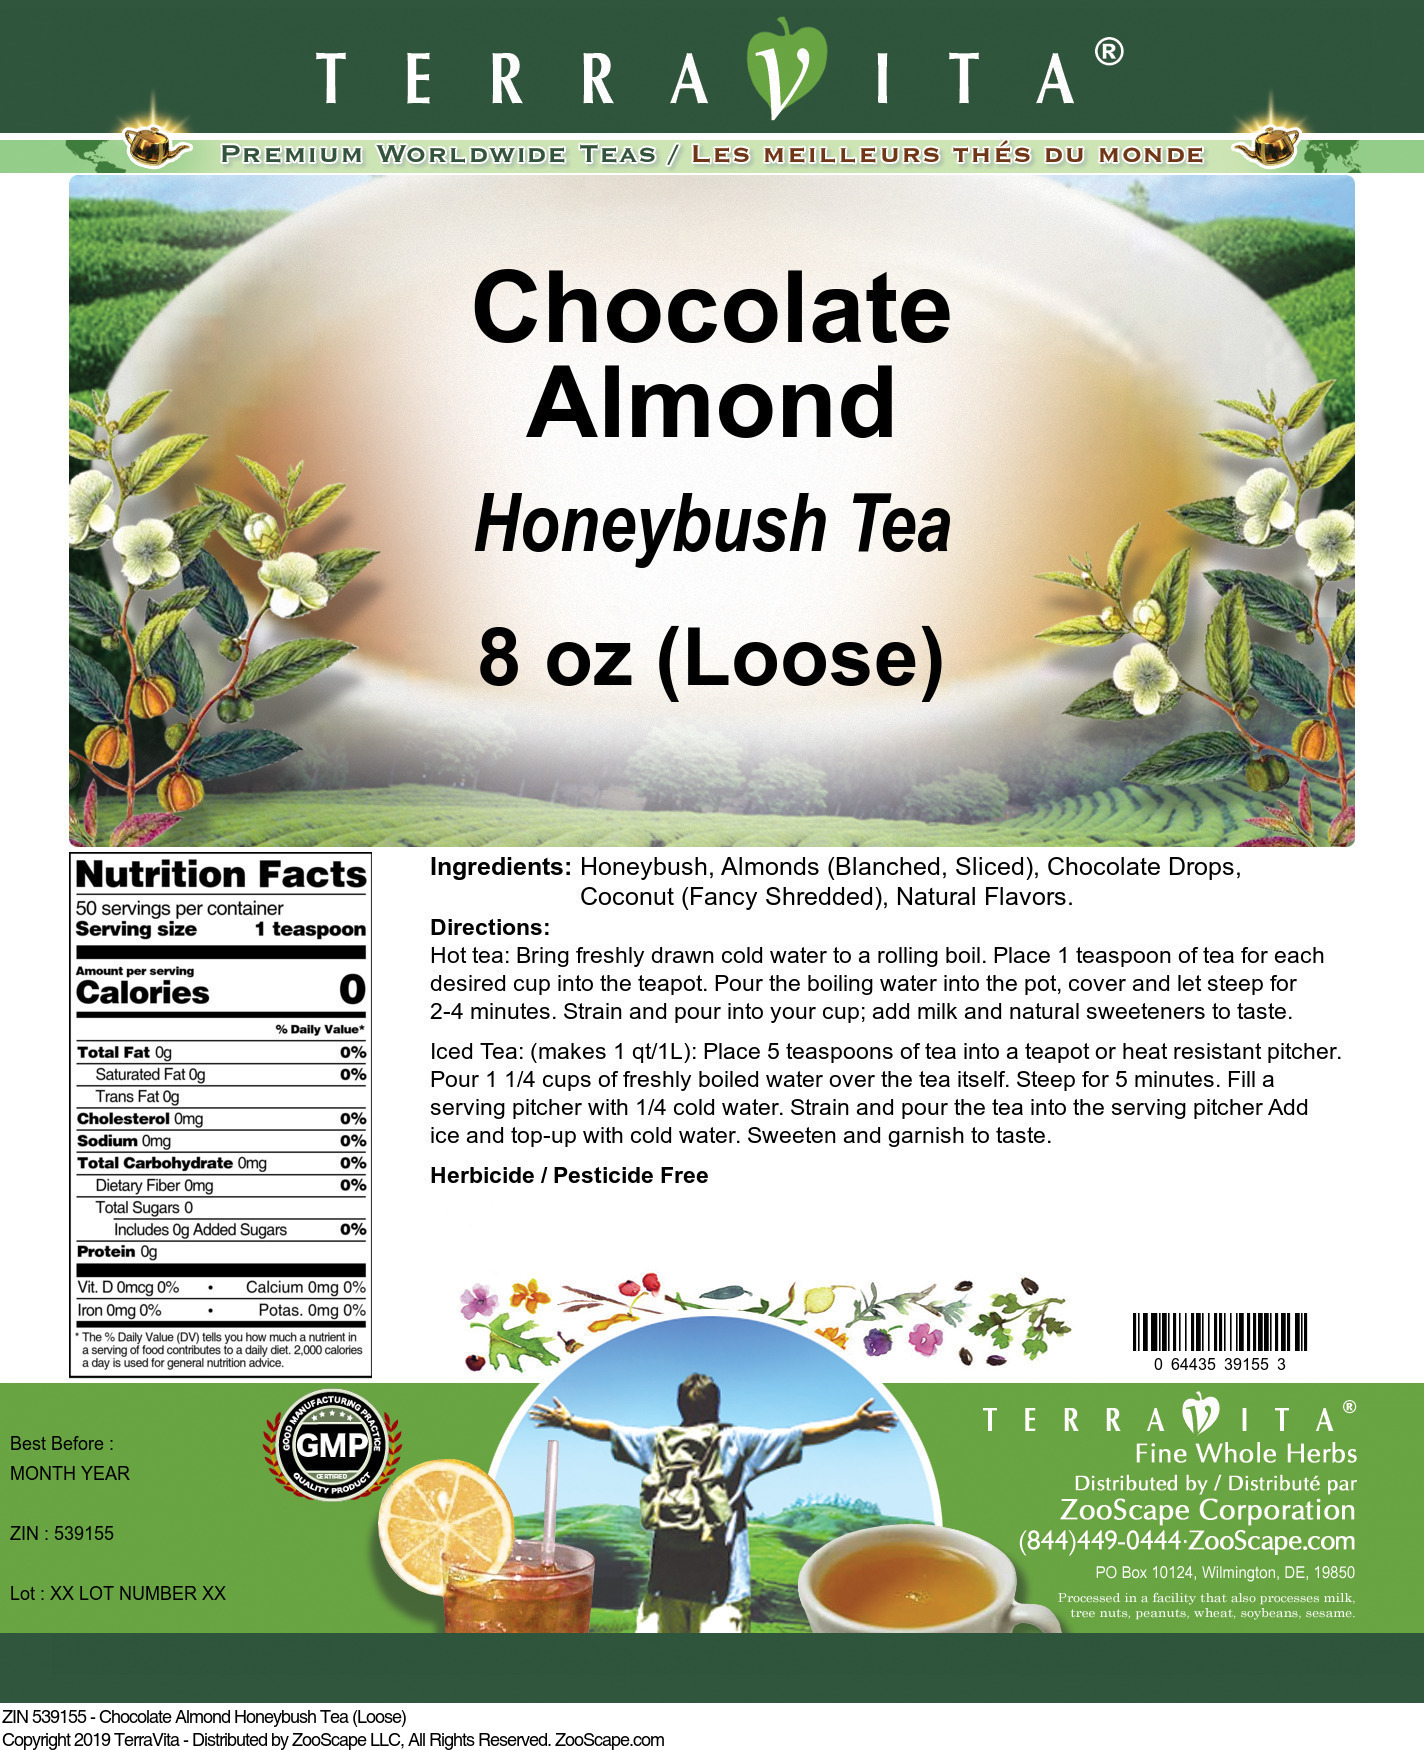 Chocolate Almond Honeybush Tea (Loose) - Label